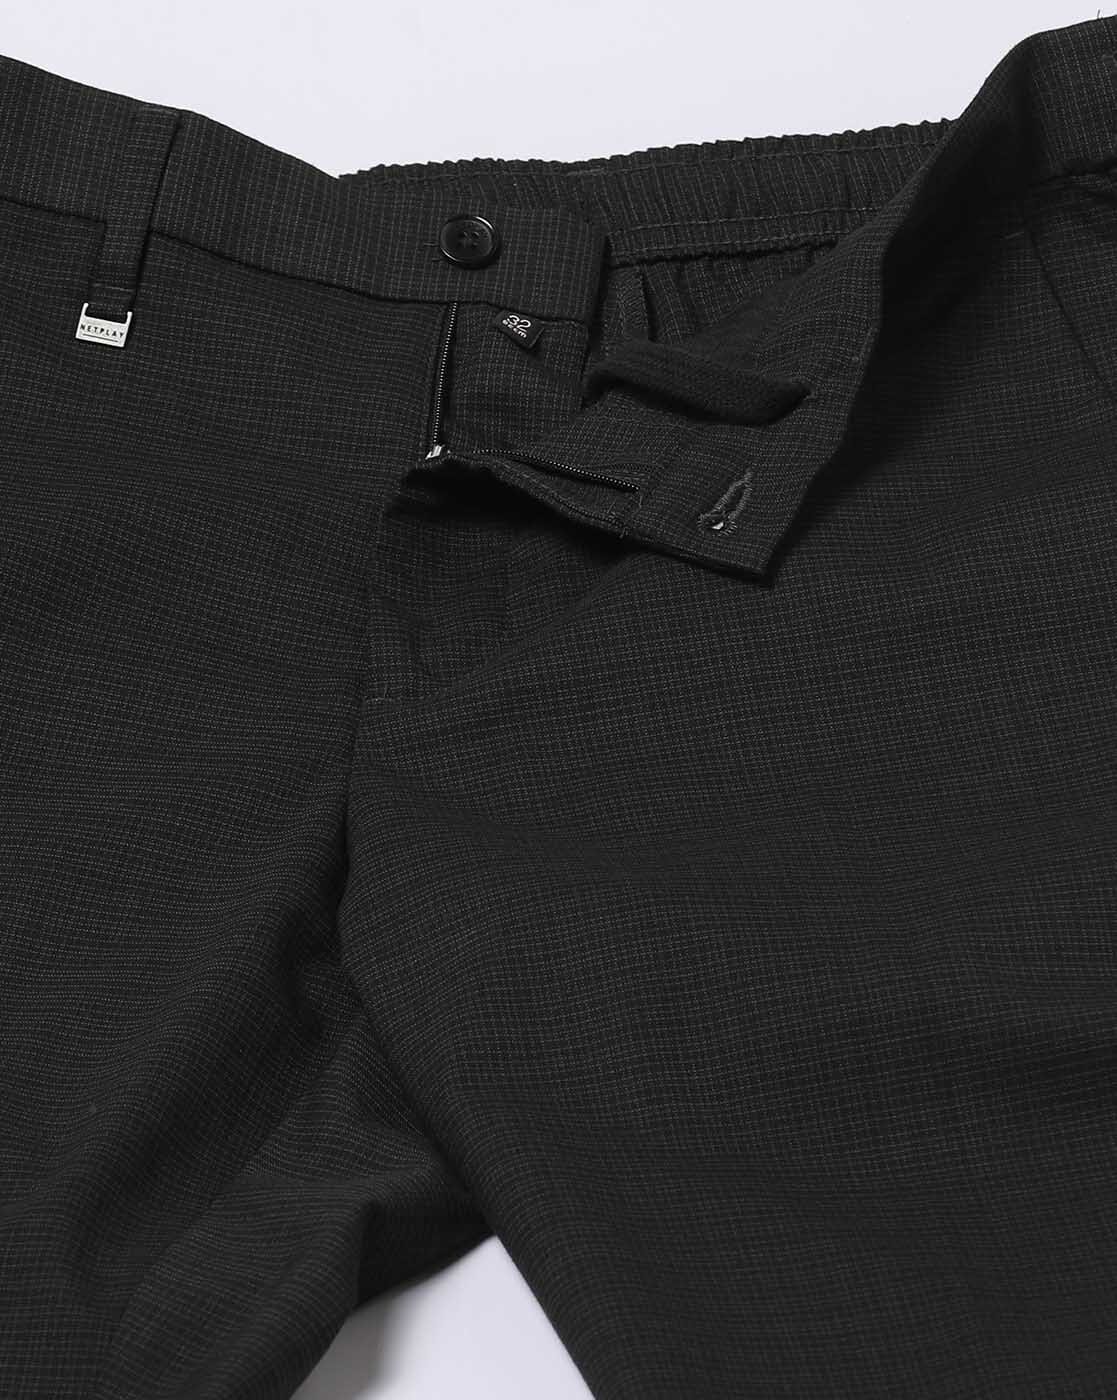 Netplay 34 x 34 Khaki Heritage Chino Slim Leg Pants  eBay